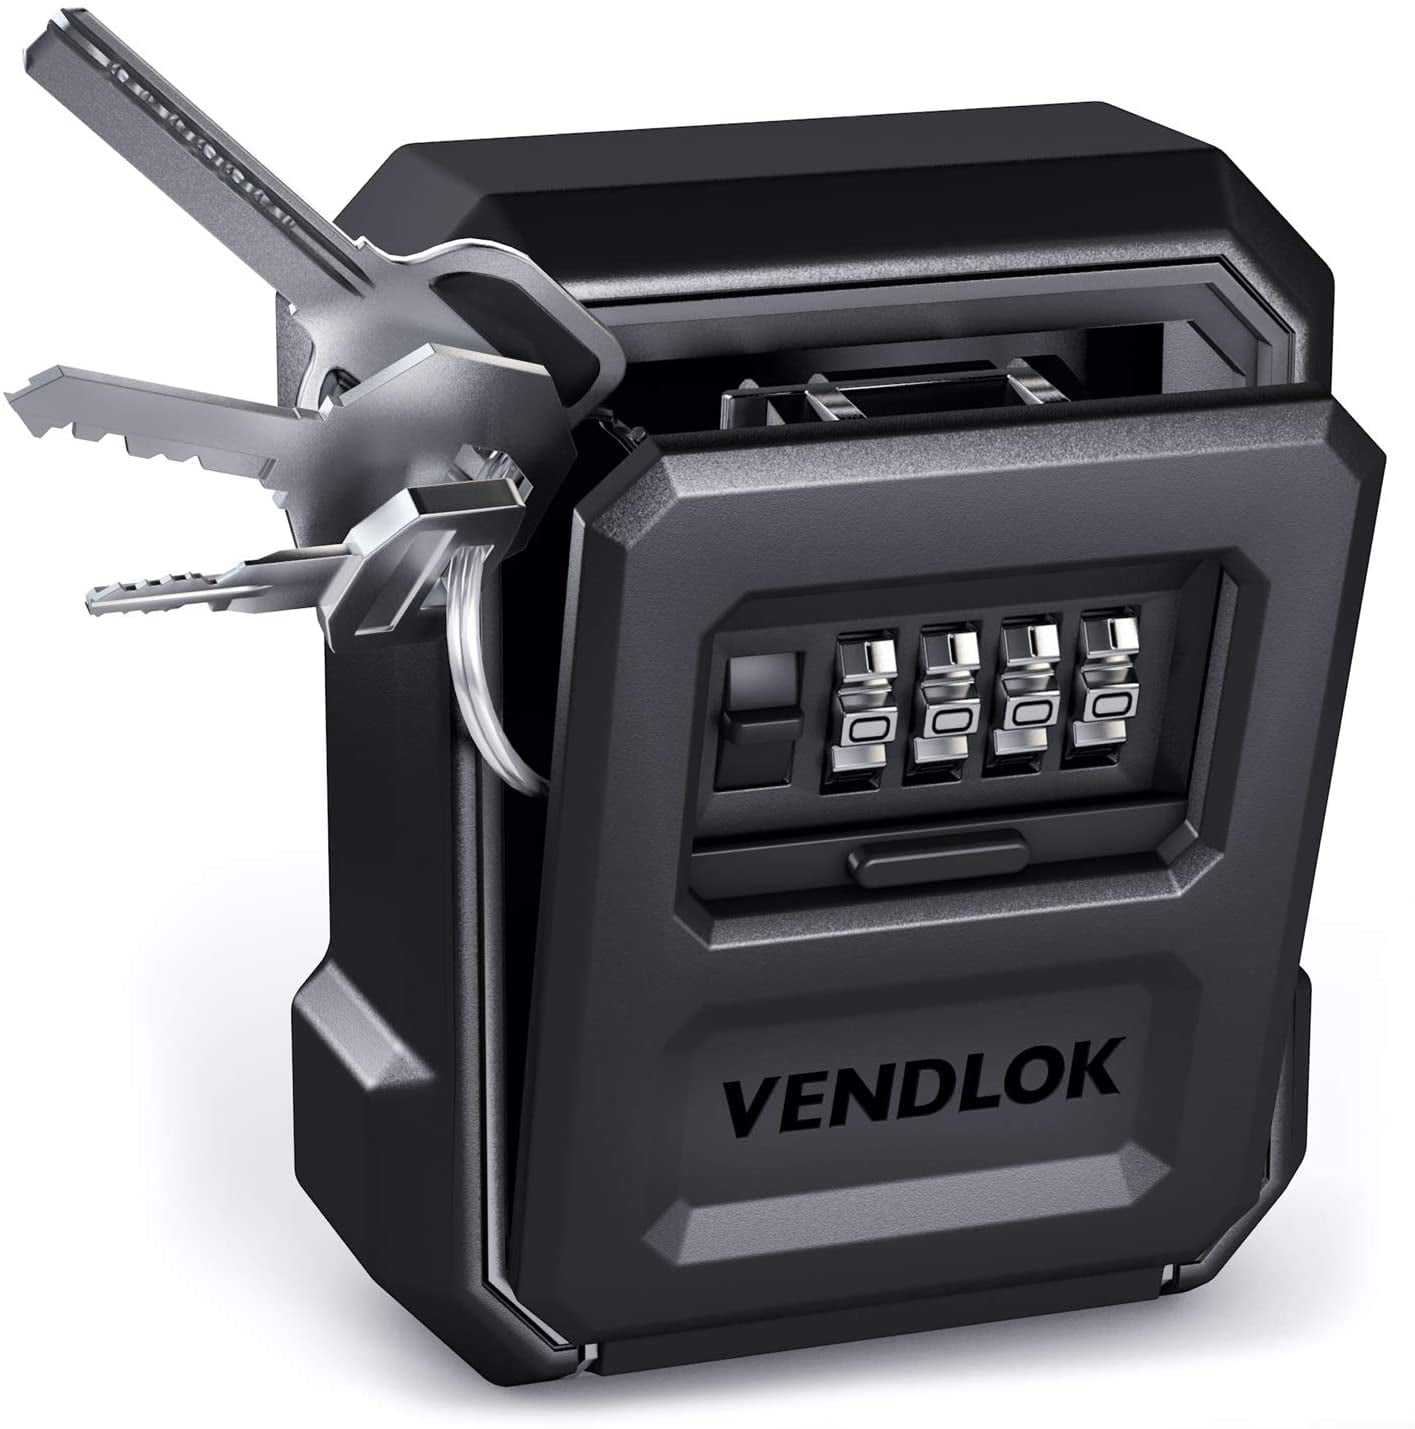 Small Lockbox, House Key Home Safe Safe Box VENDLOK Key Lock Box With Code 